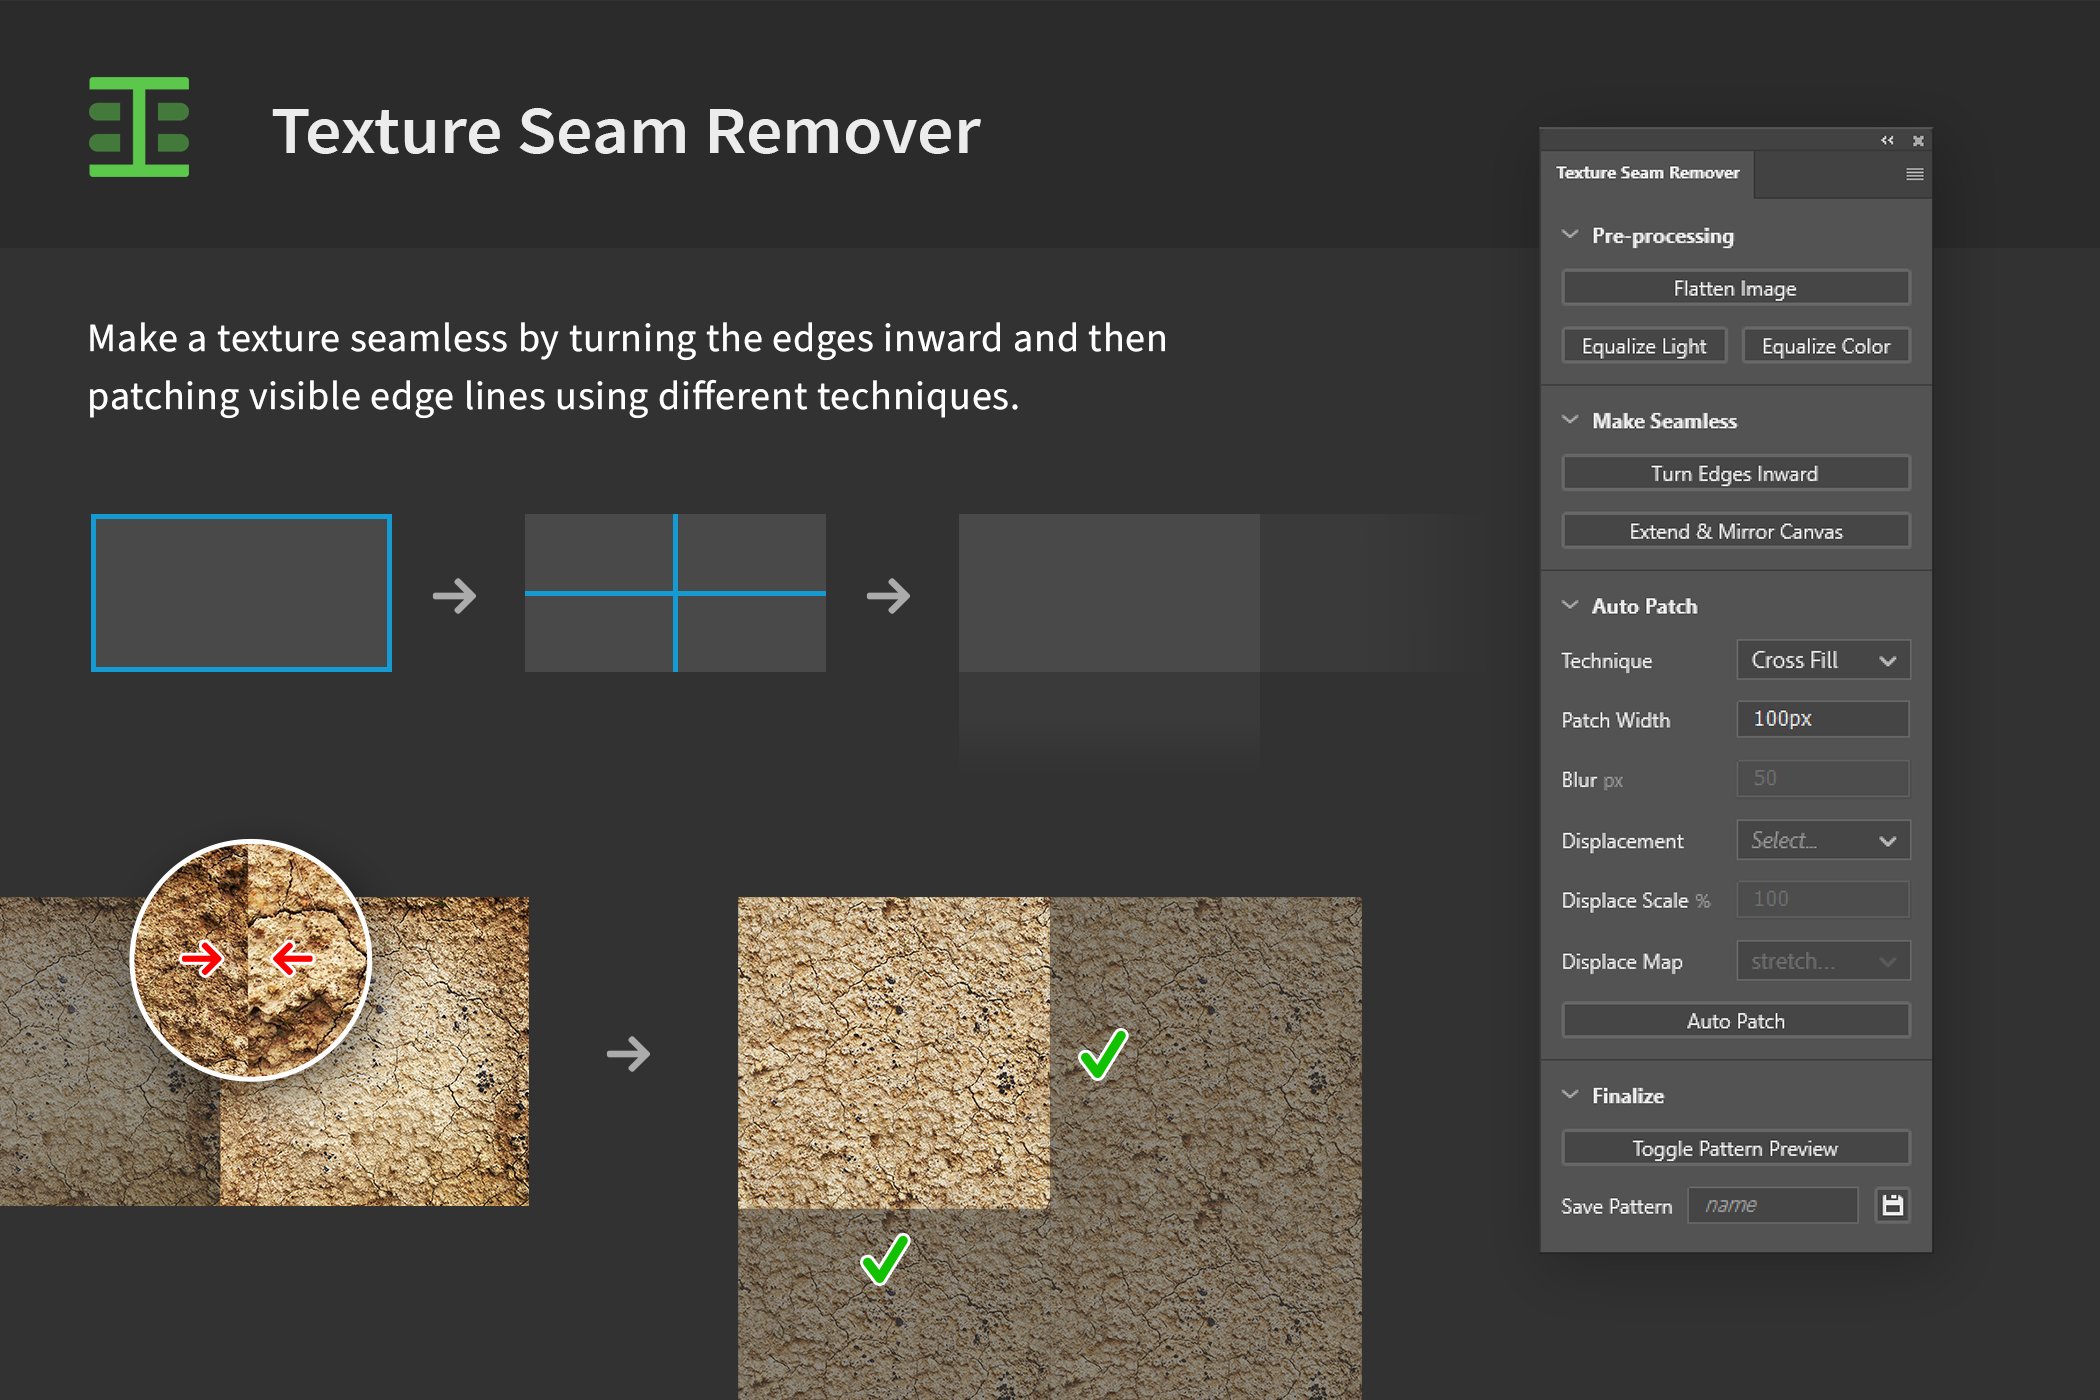 Texture Seam Removercover image.